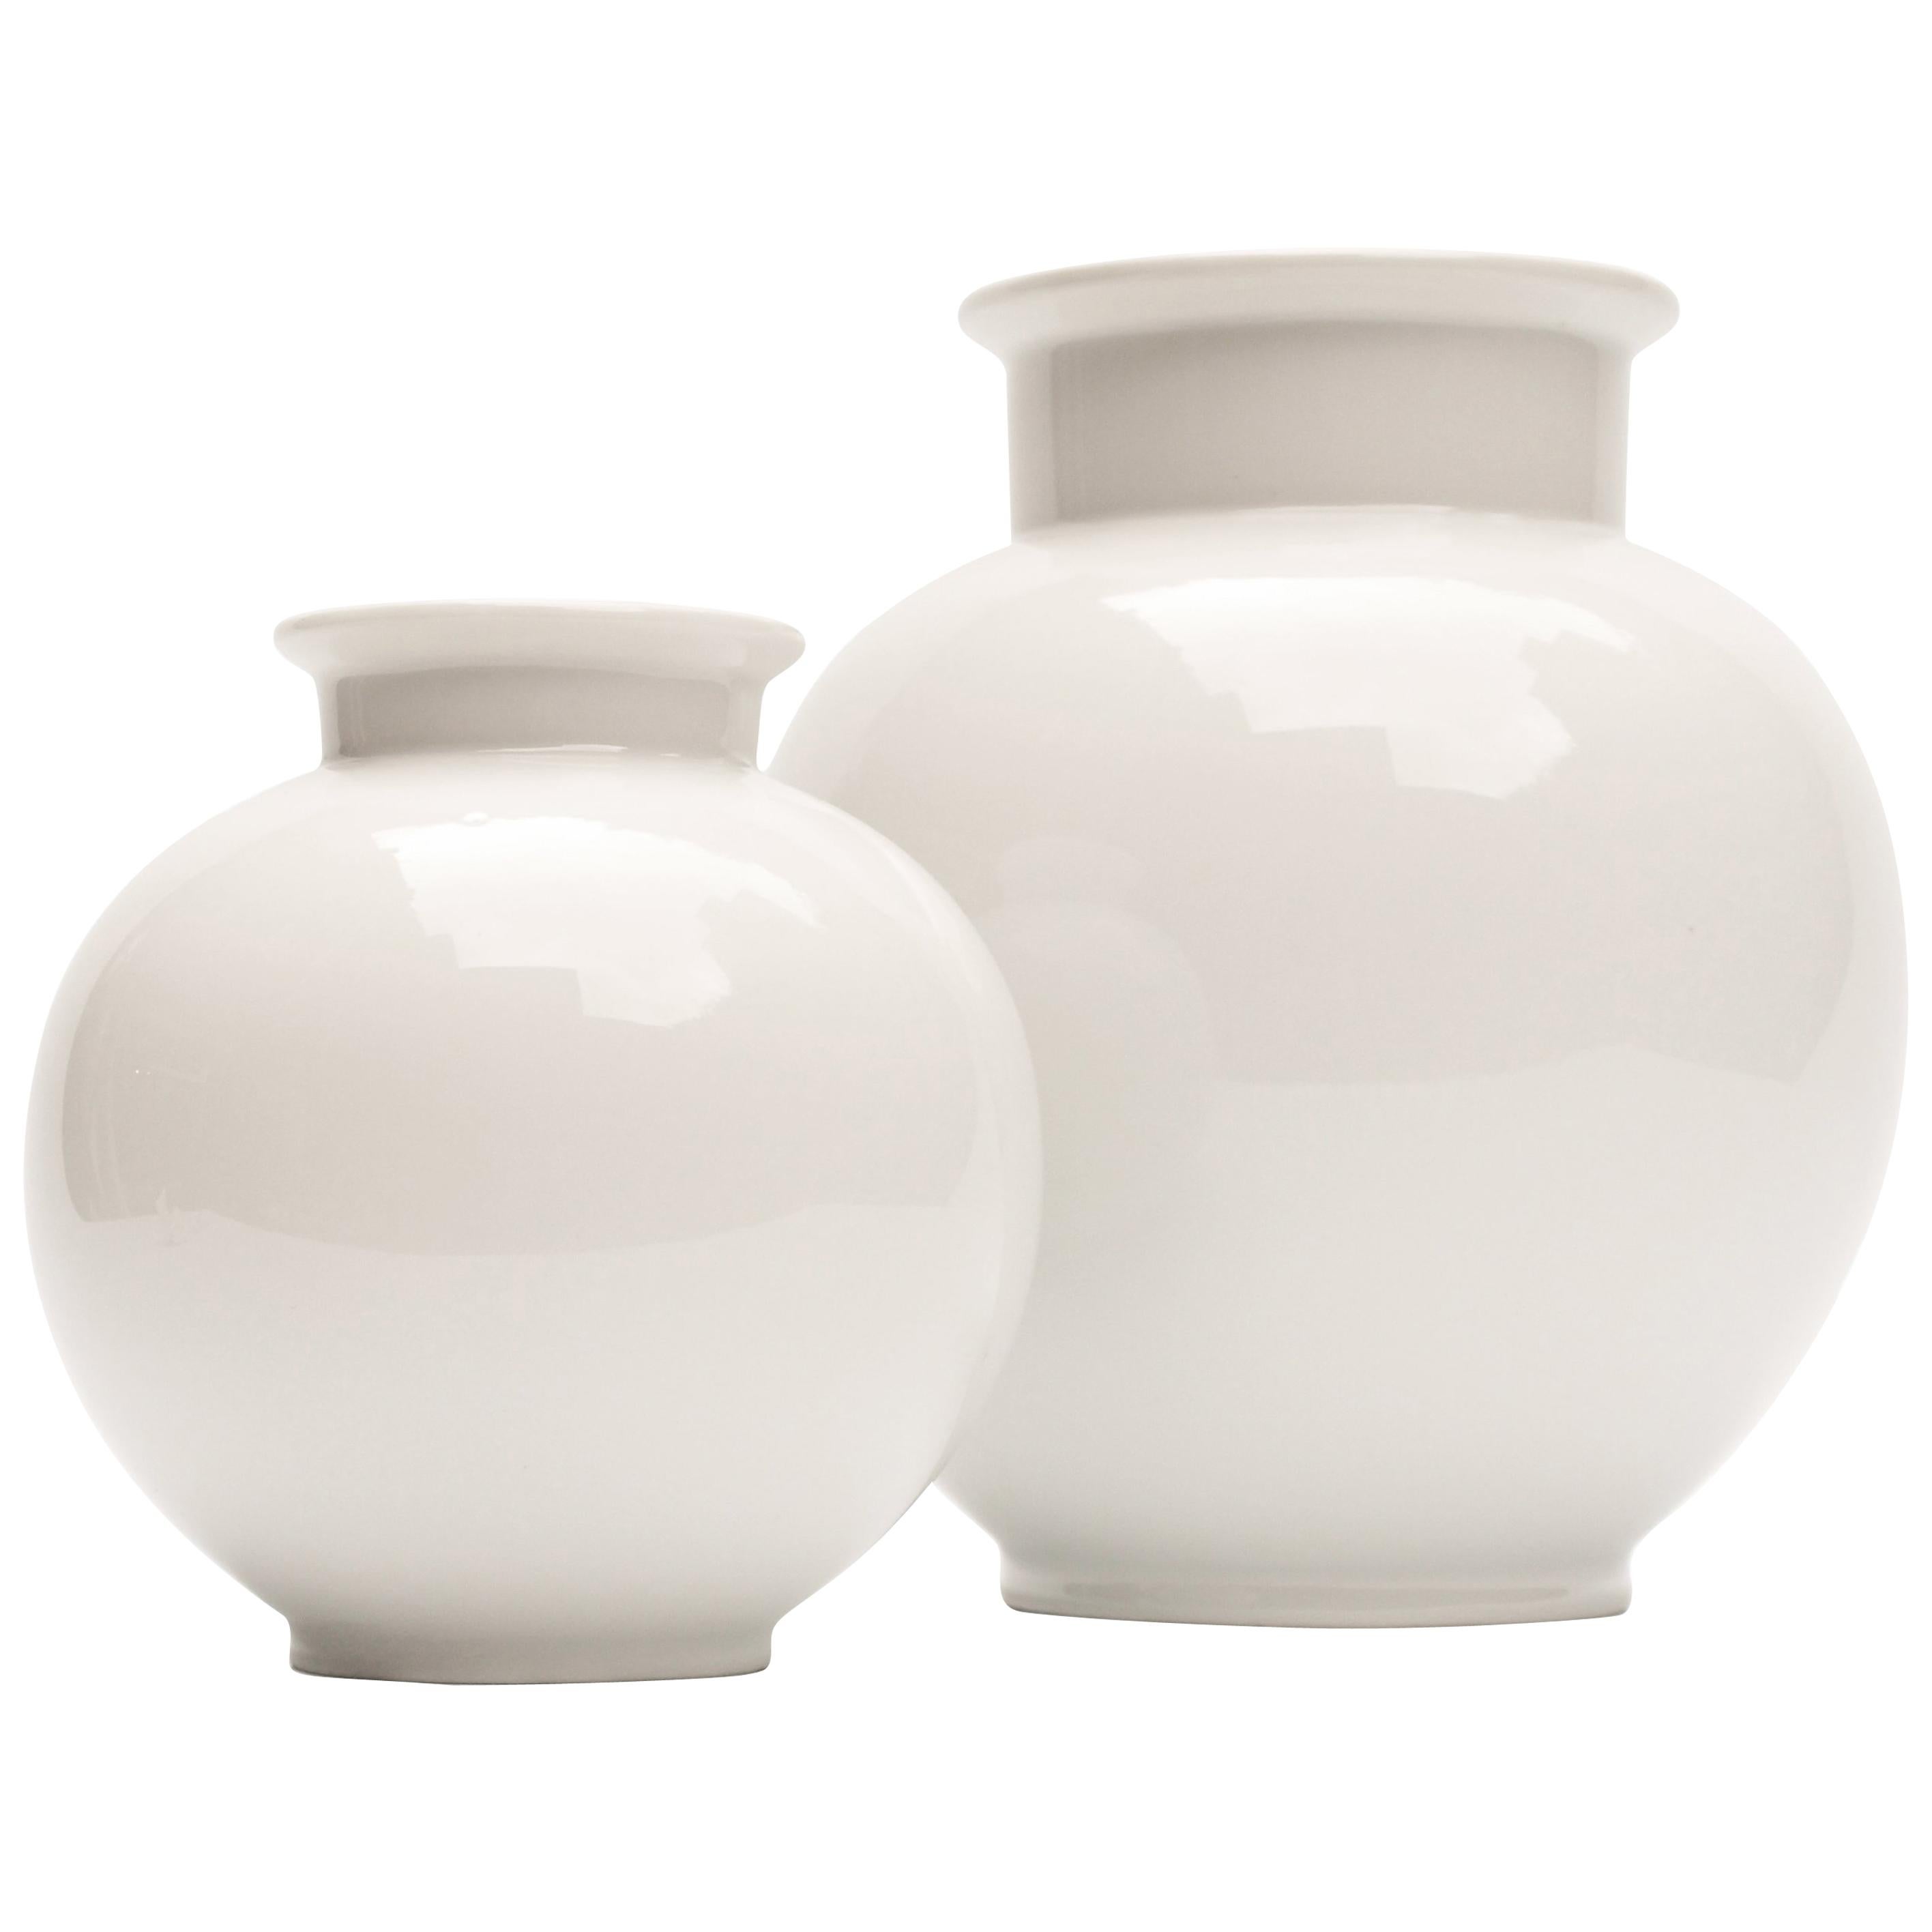 Pair of Porcelain Flower Vases by Thomas